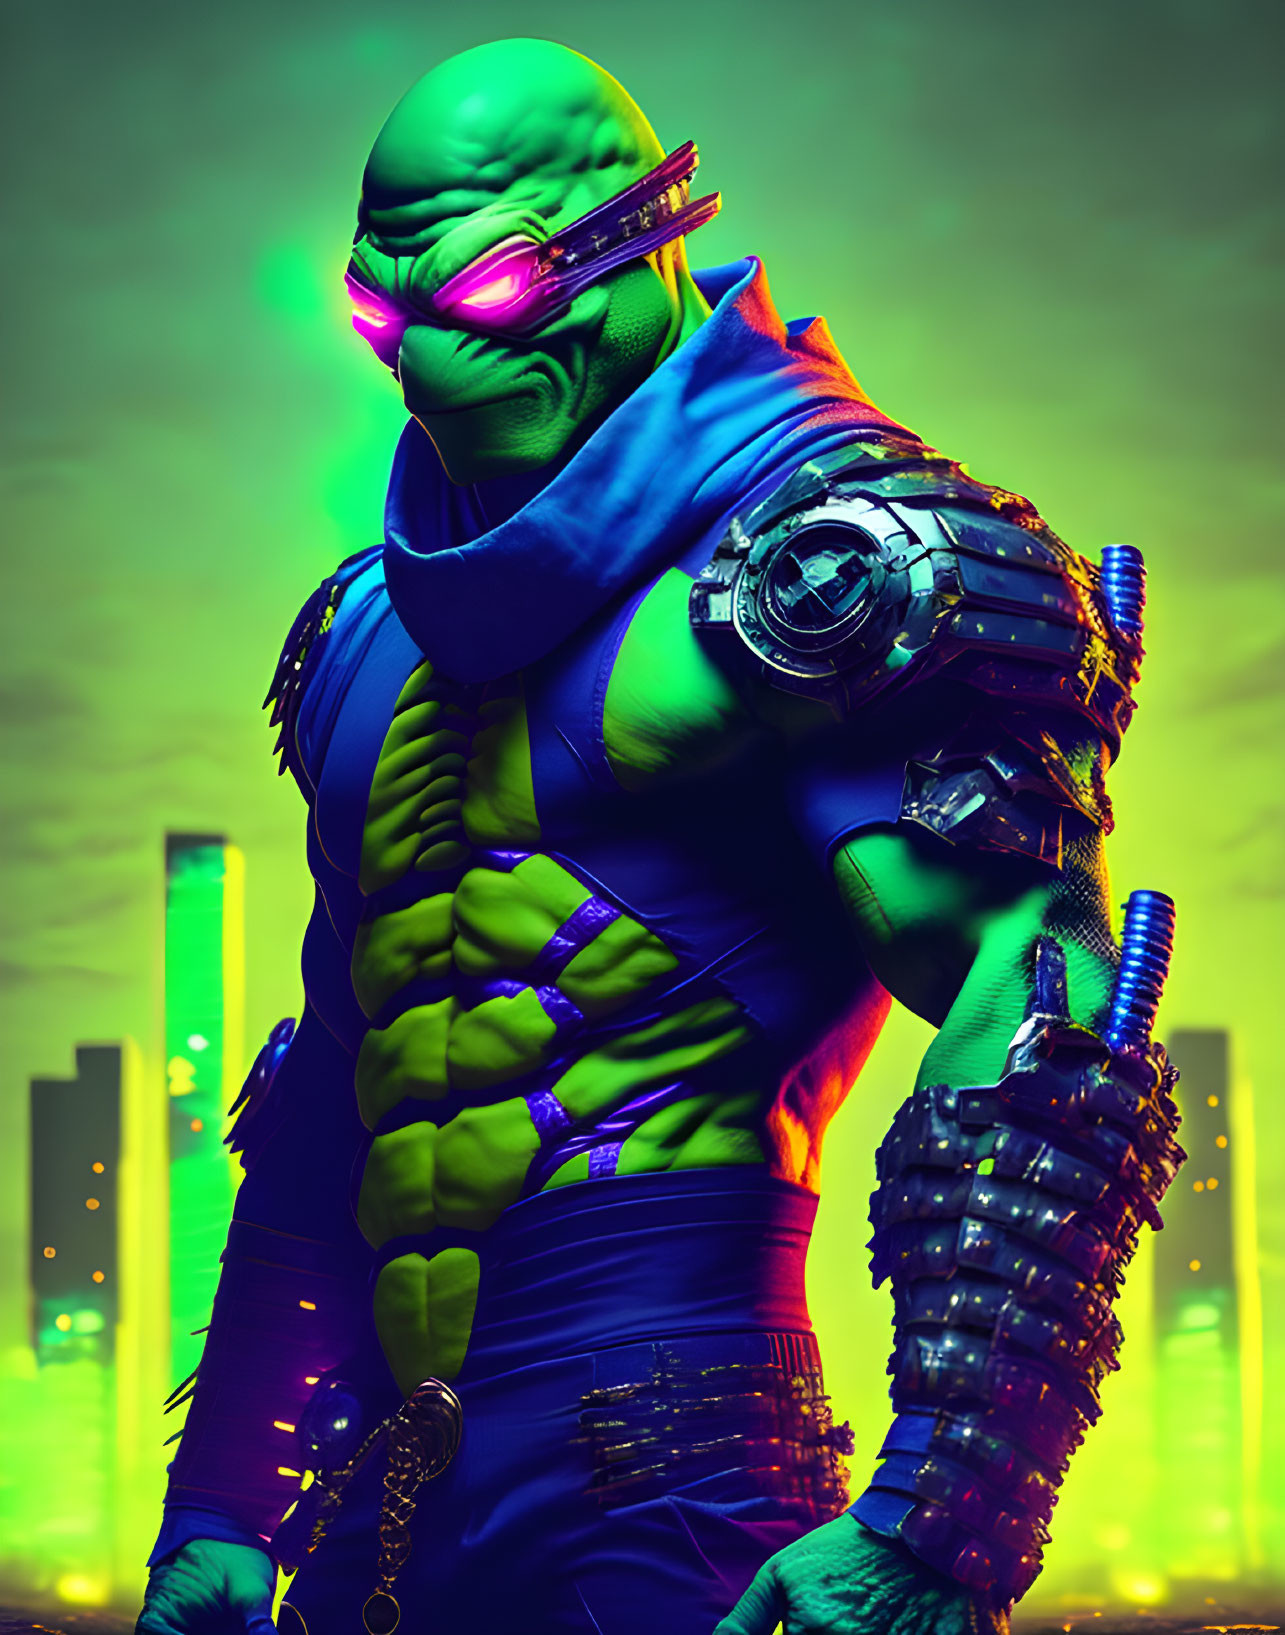 Cyberpunk ninja turtle